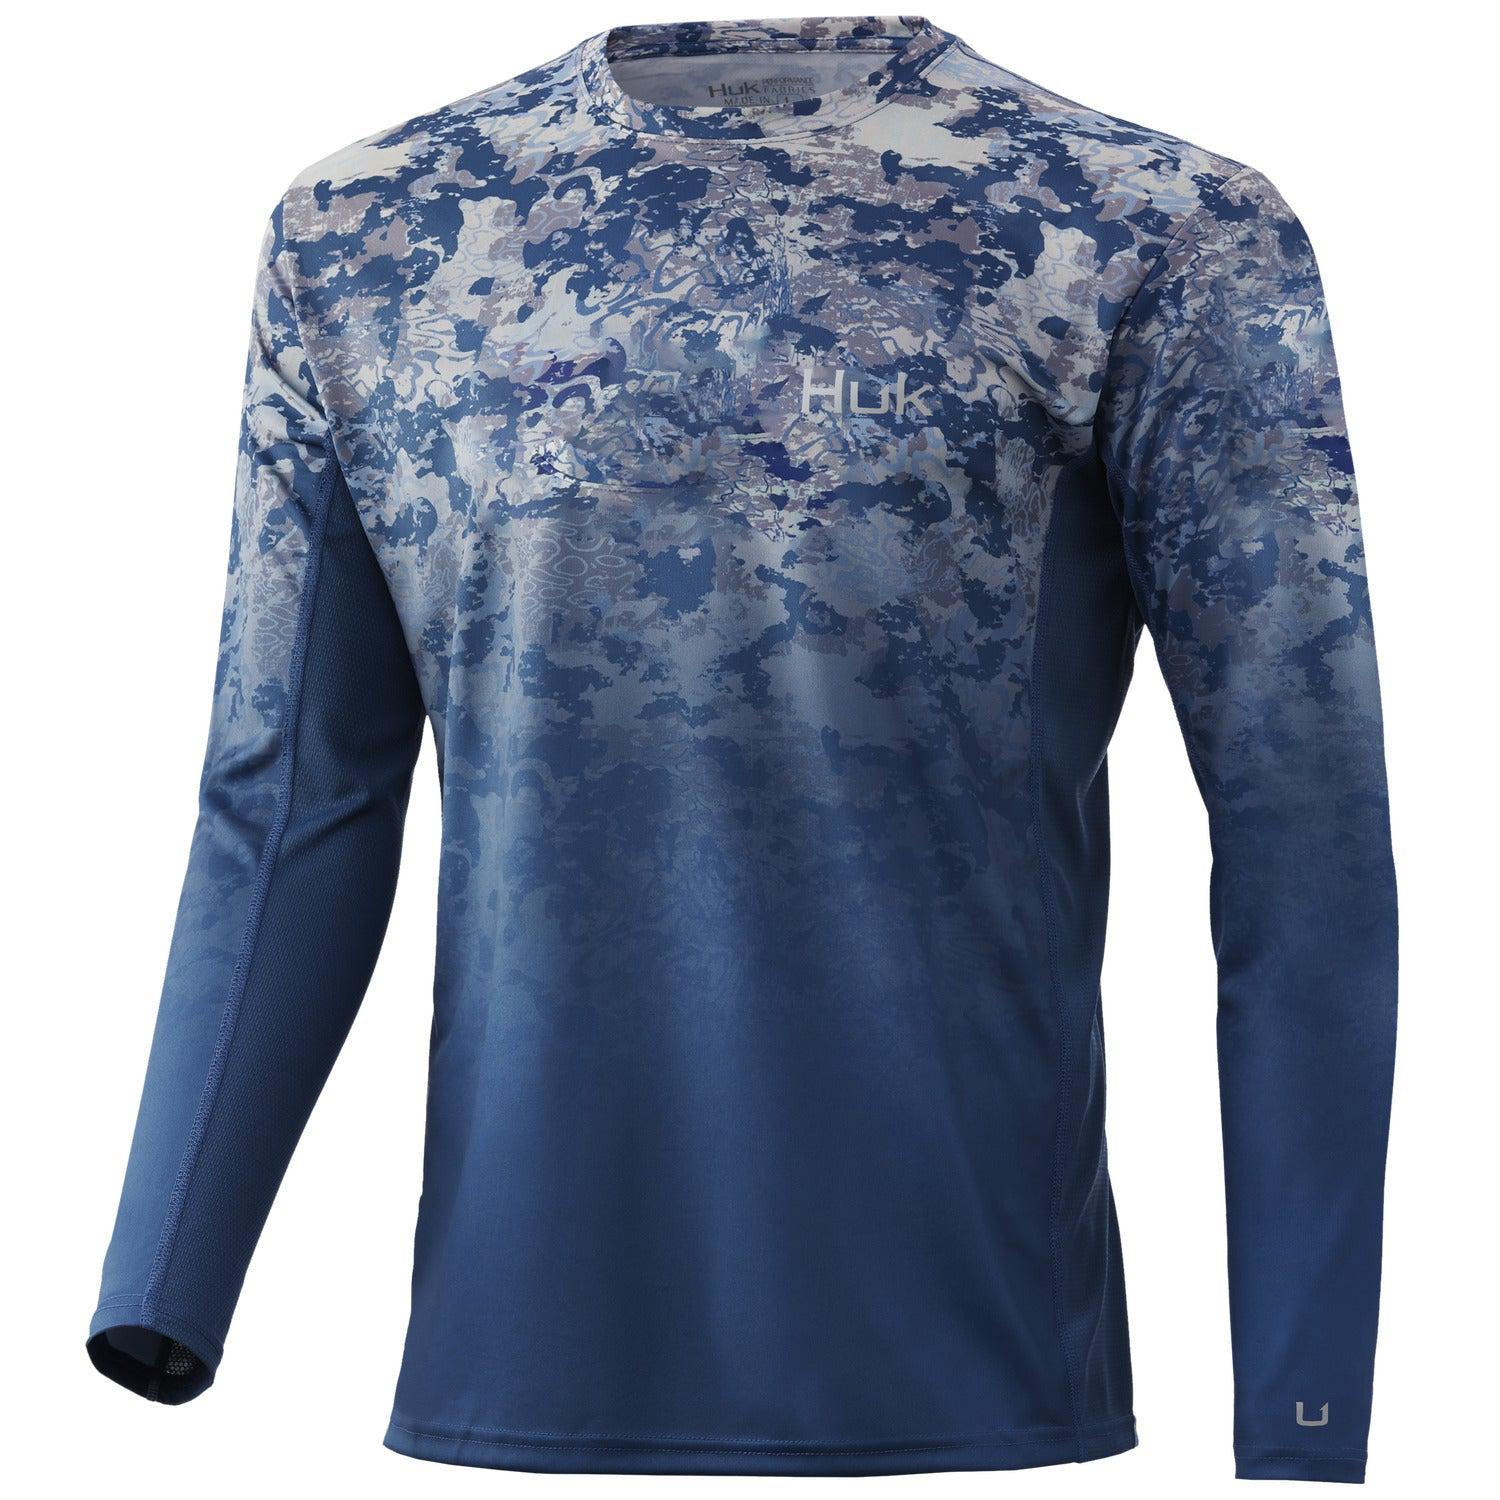 Huk Men's Medium Lichen Icon x Long Sleeve Shirt